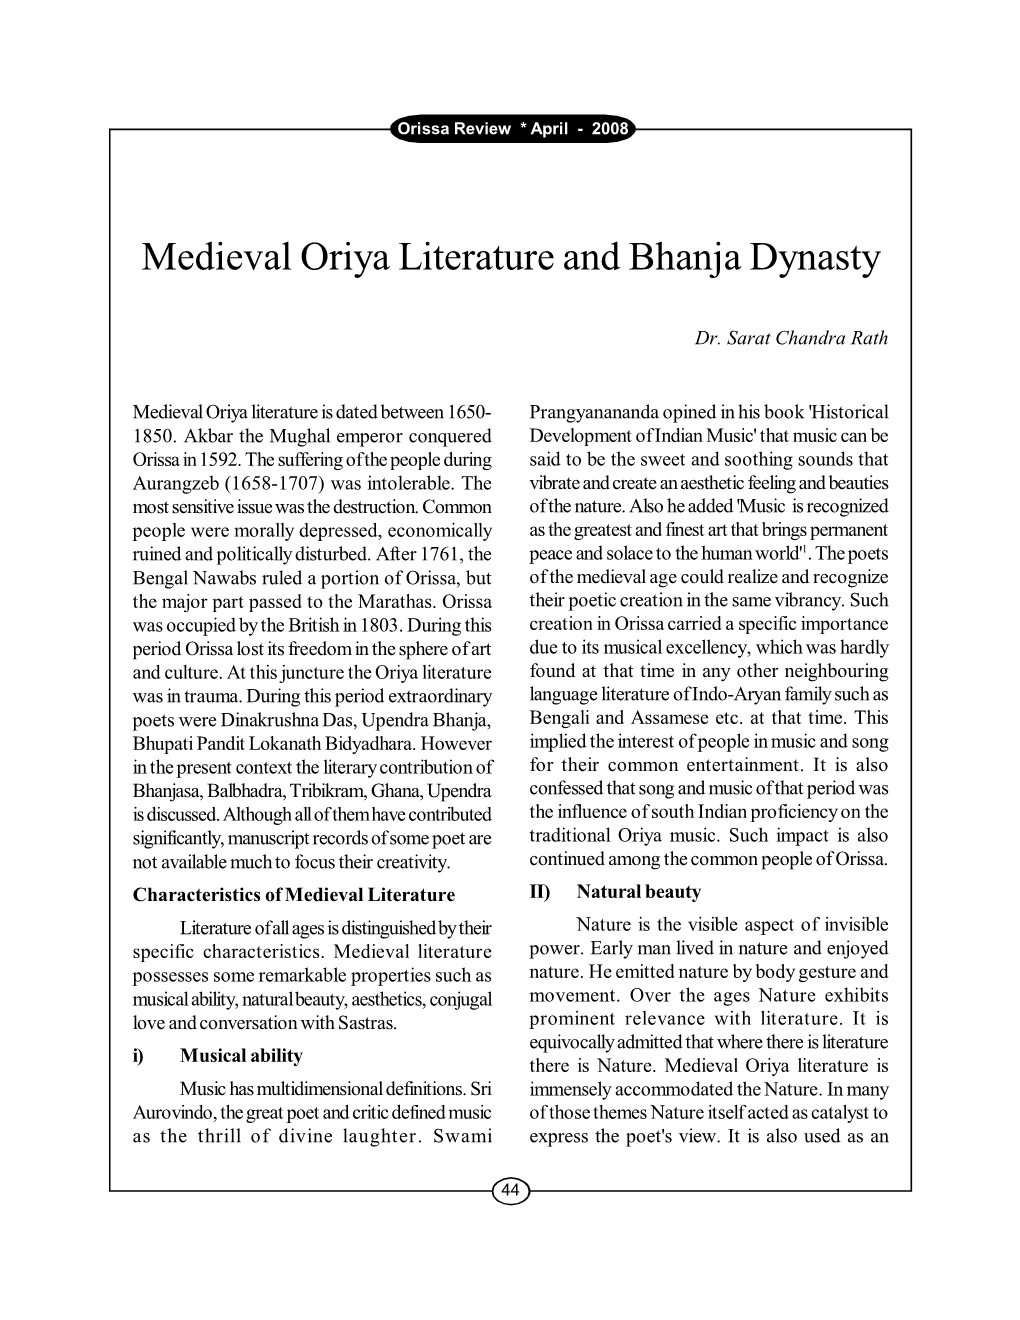 Medieval Oriya Literature and Bhanja Dynasty